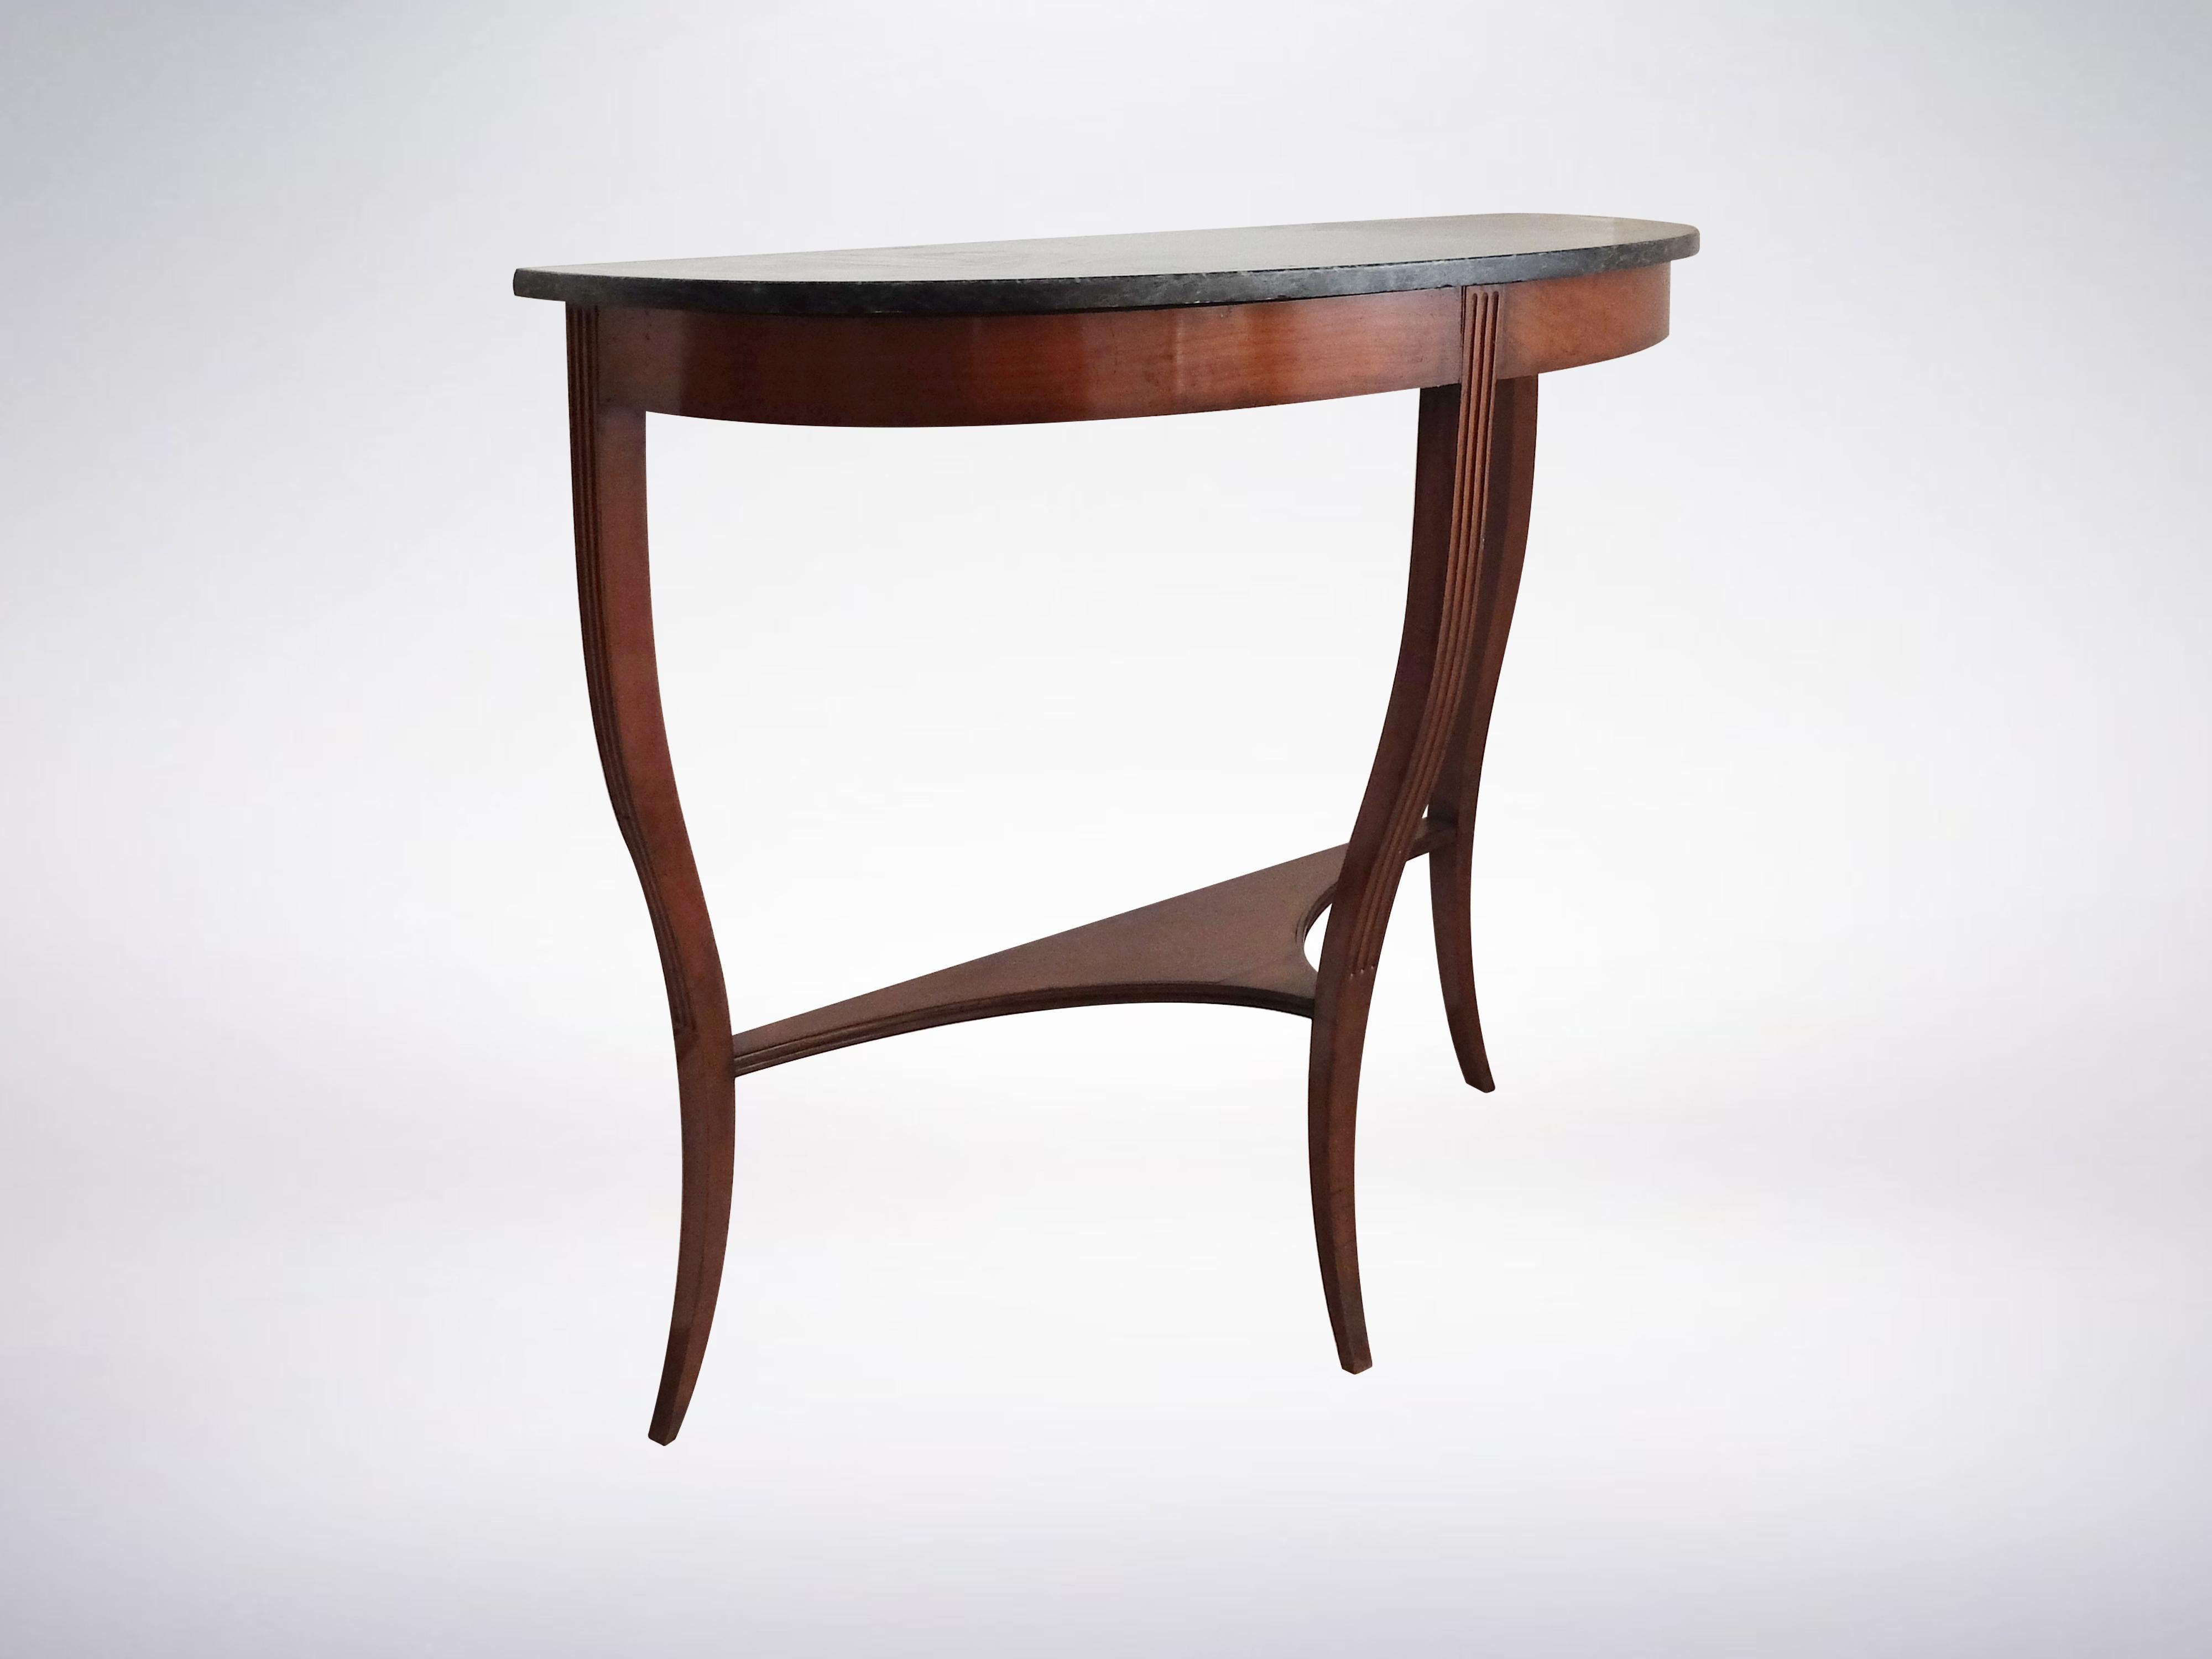 Mid-20th Century Italian Mid-Century Modern Wooden Demilune Consolle Table, 1950s